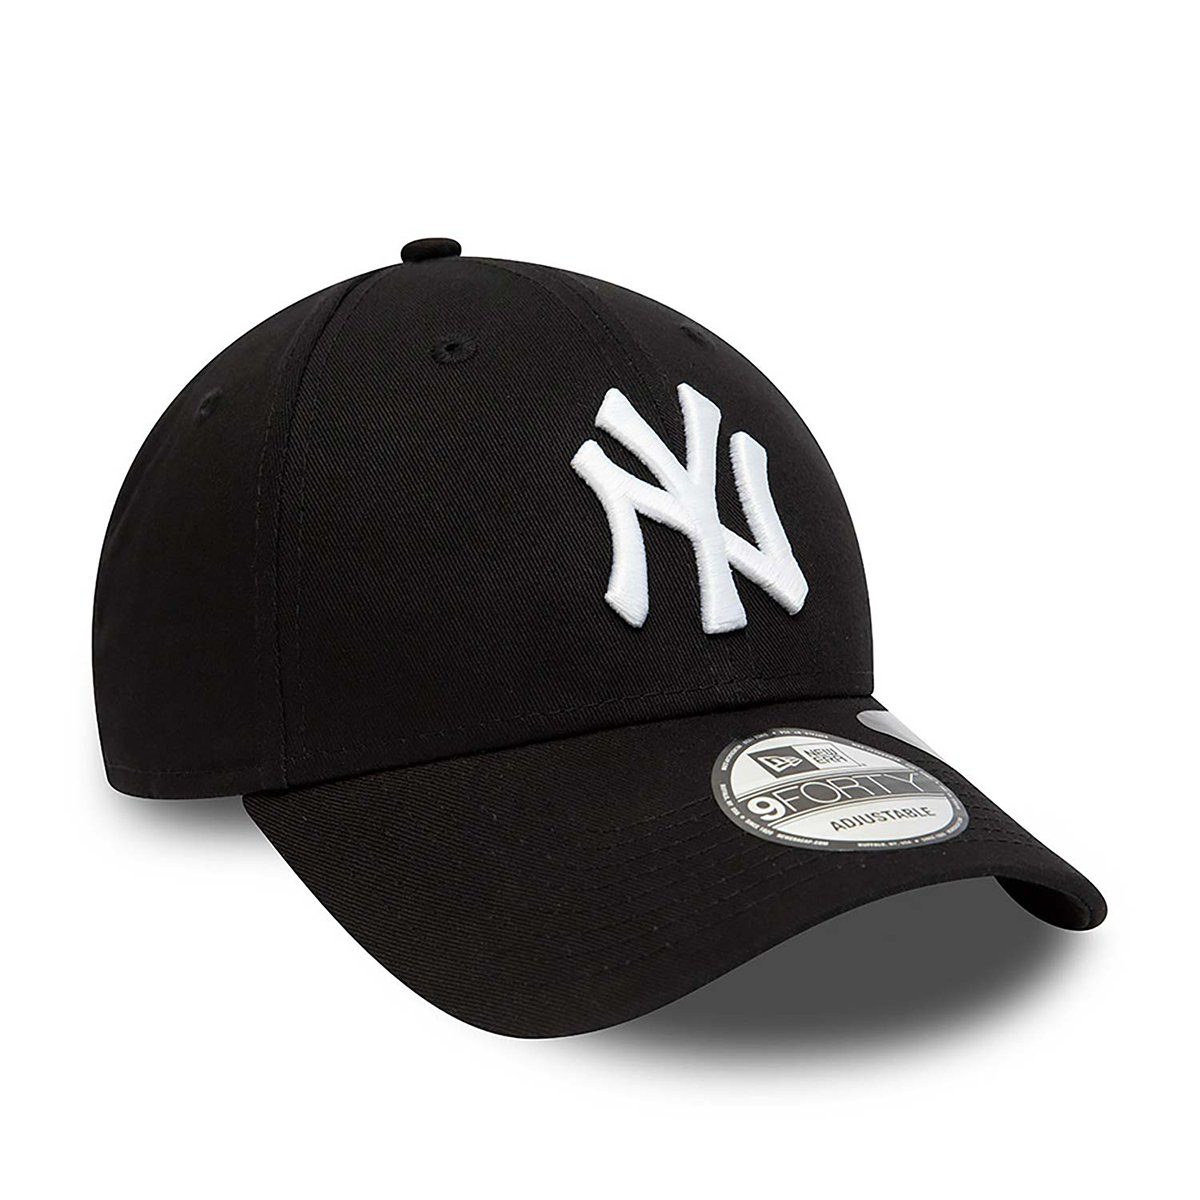 Cap Baseball York New Era Yankees Repreve New